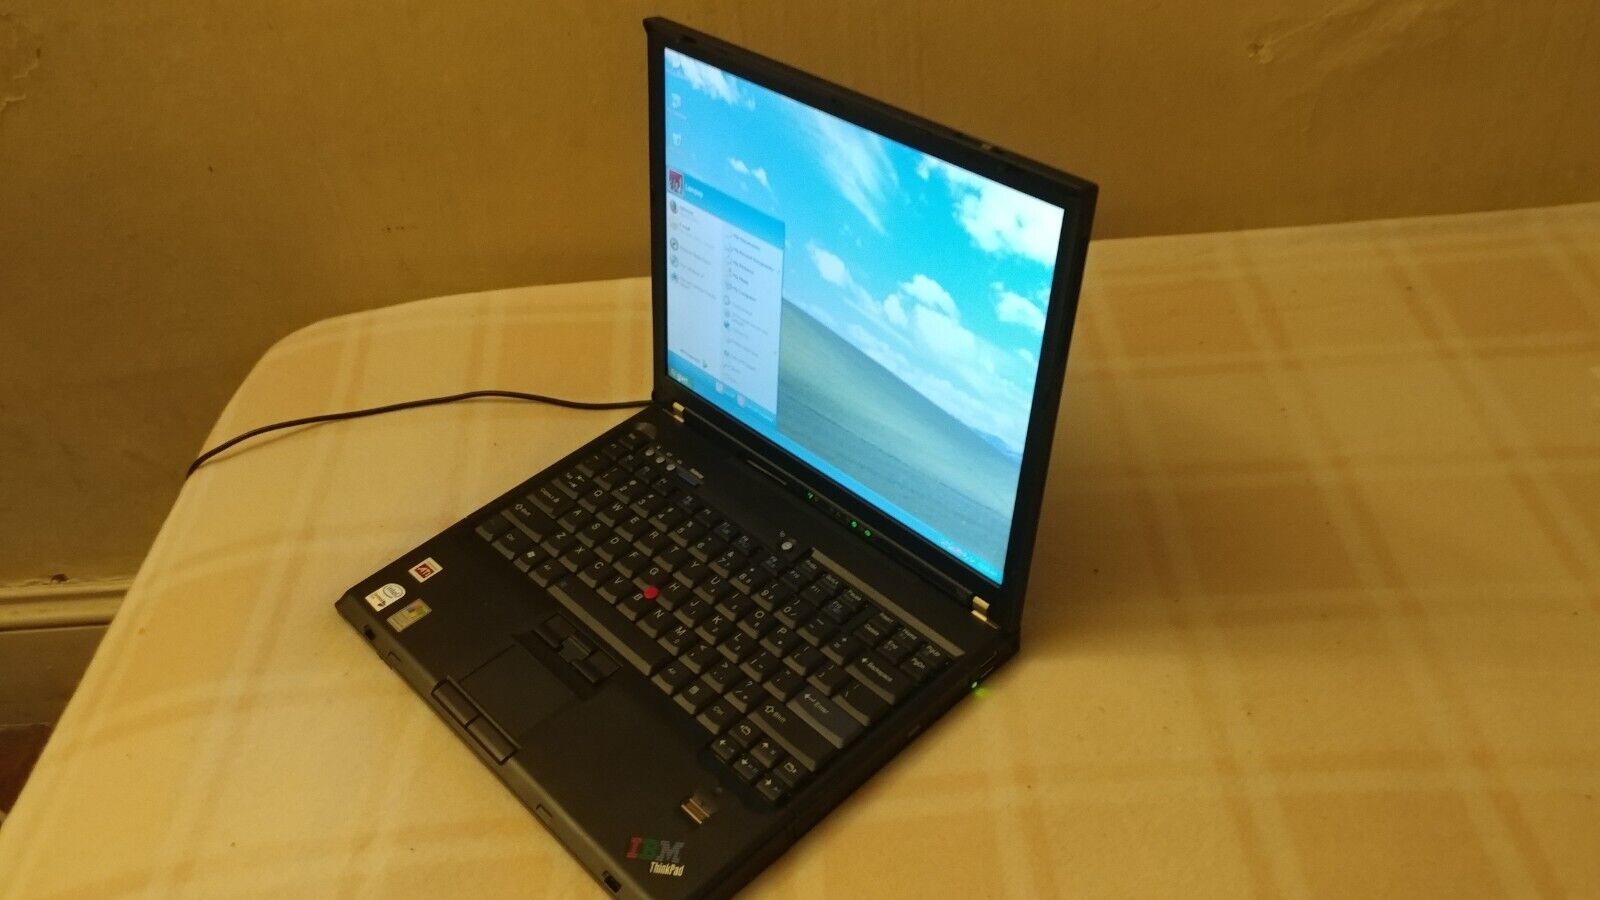 IBM Lenovo Thinkpad T60 Laptop 1.83 GHz 4 GB Ram 128 GB SSD Windows XP pro SP3